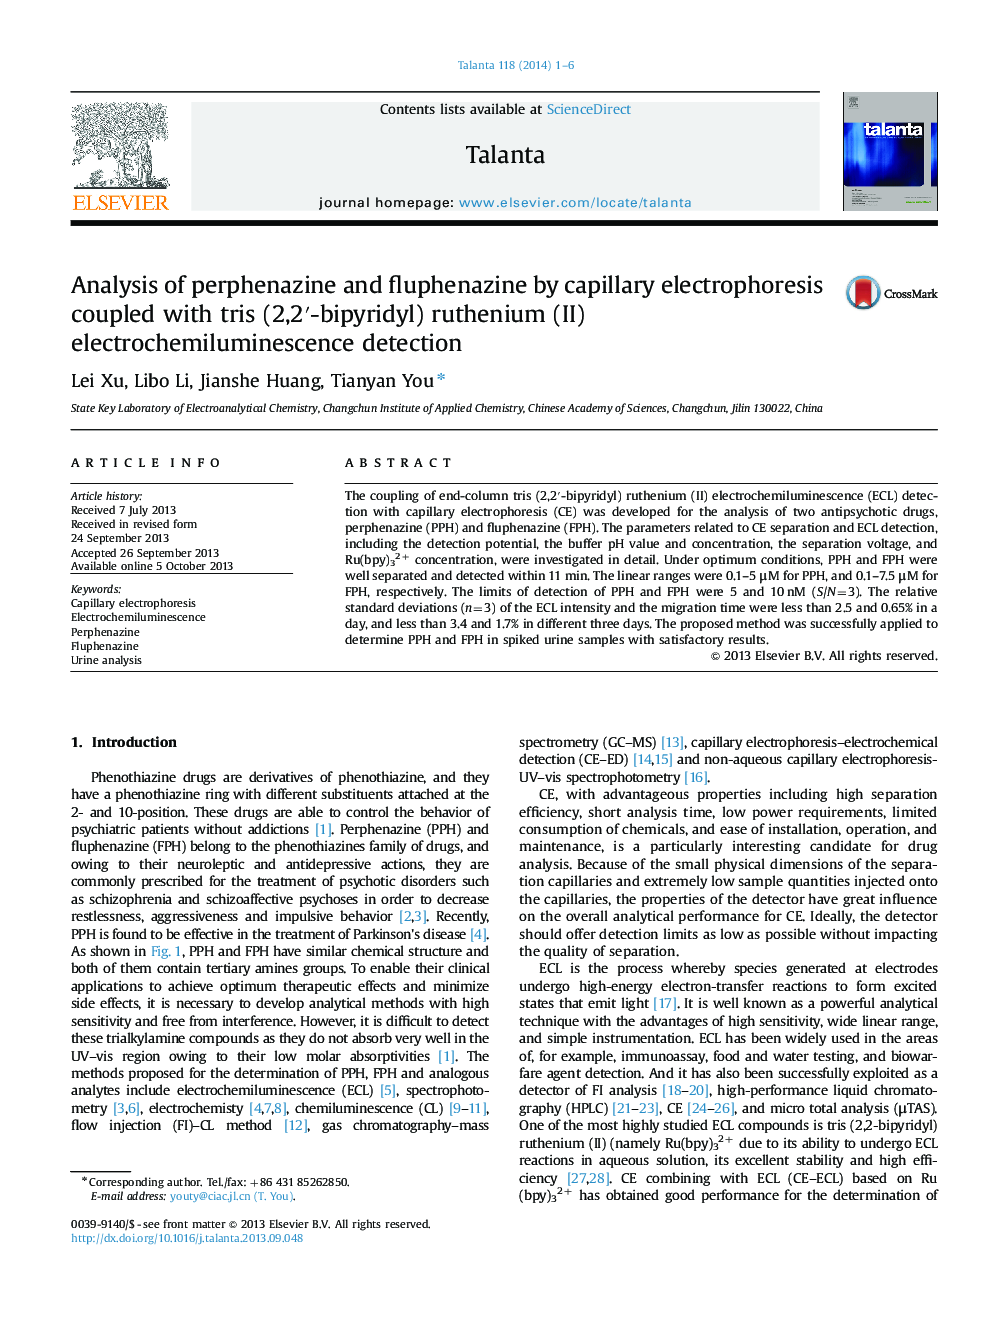 Analysis of perphenazine and fluphenazine by capillary electrophoresis coupled with tris (2,2′-bipyridyl) ruthenium (II) electrochemiluminescence detection